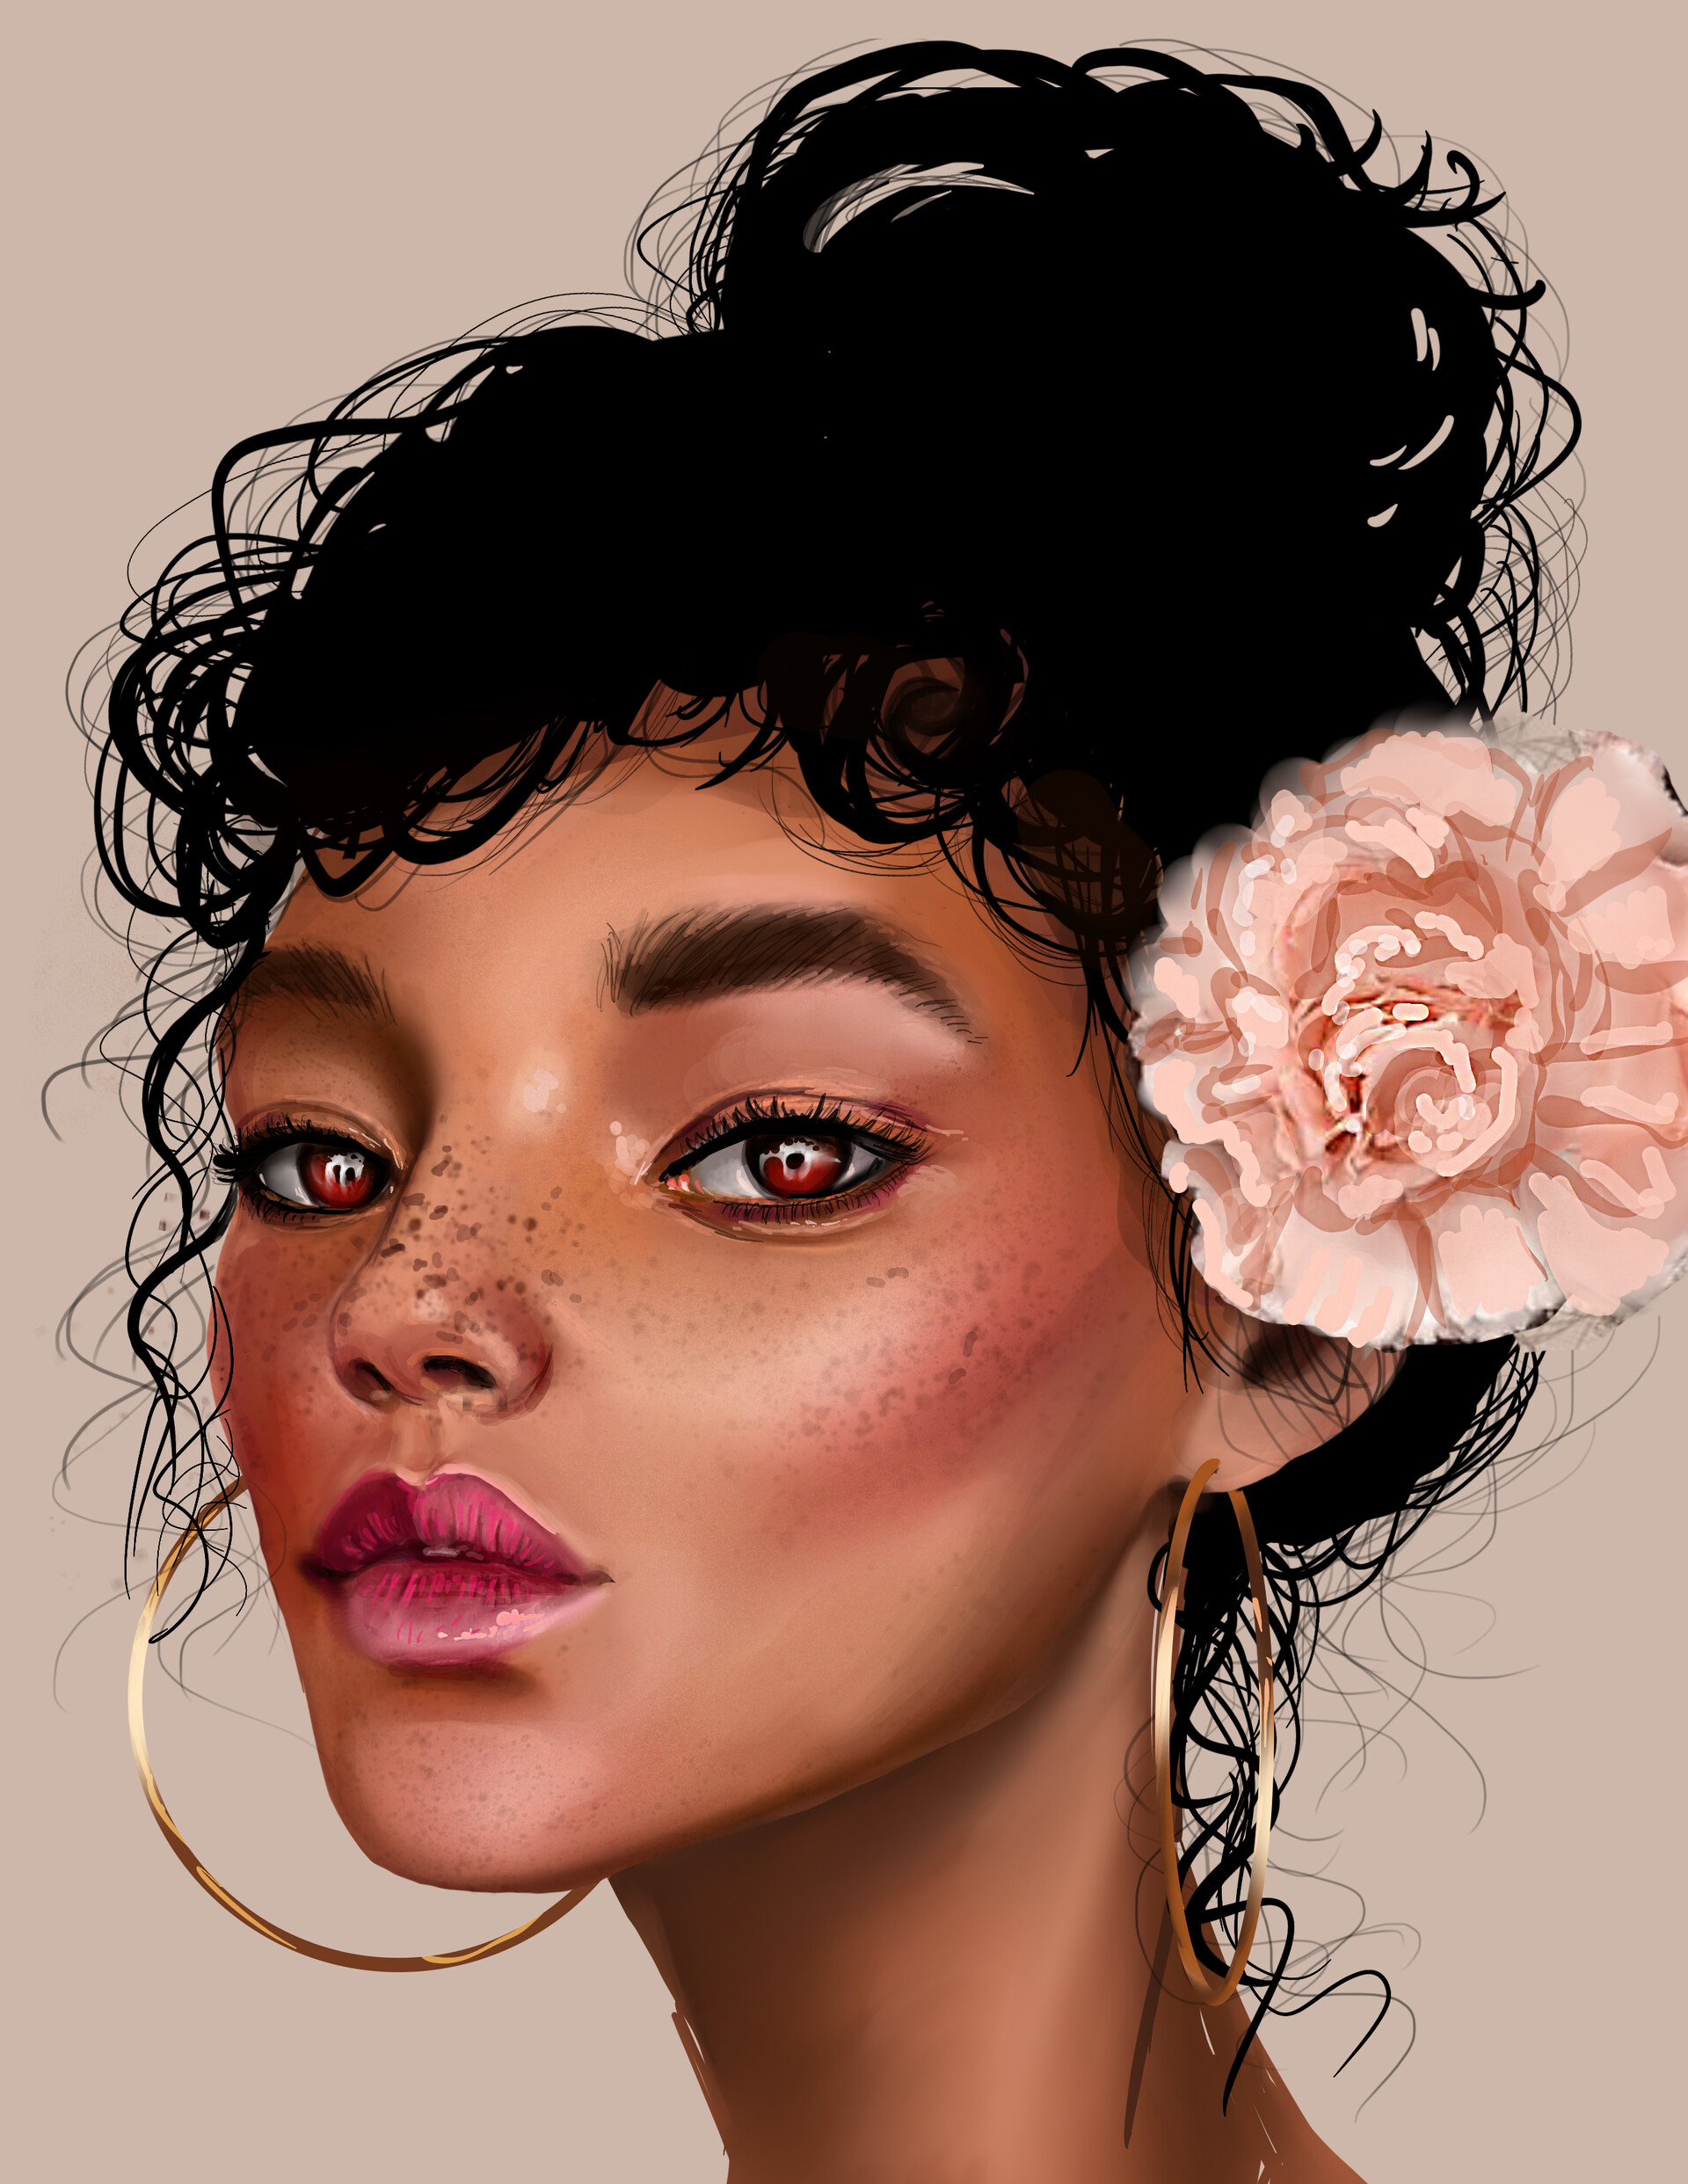 ArtStation - Portrait with flower